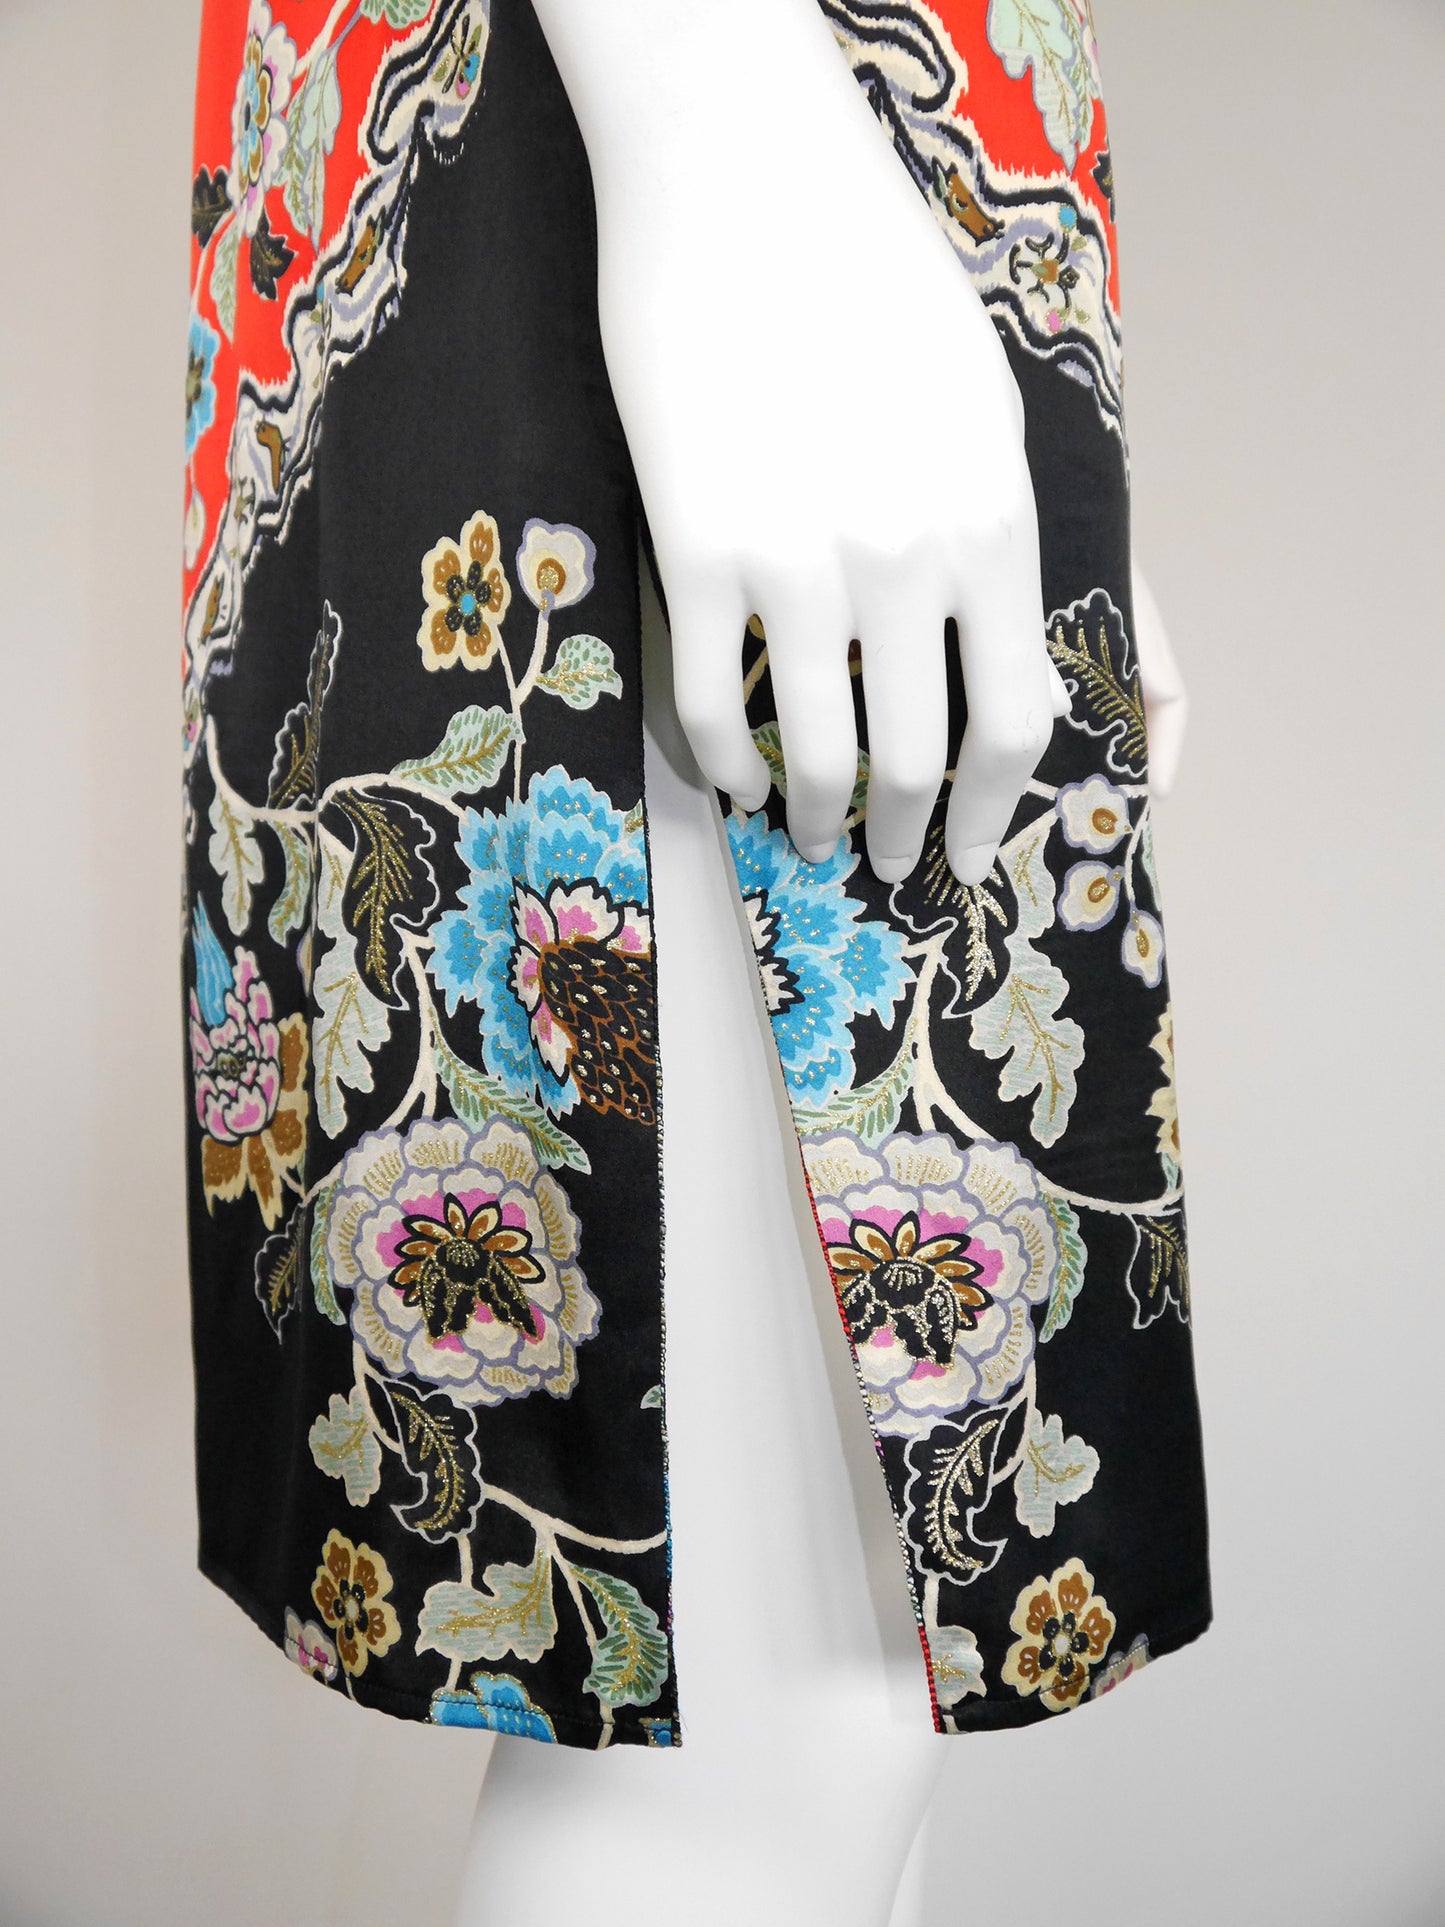 ROBERTO CAVALLI Spring 2003 Vintage Floral Asian Cheongsam Silk Dress Size M